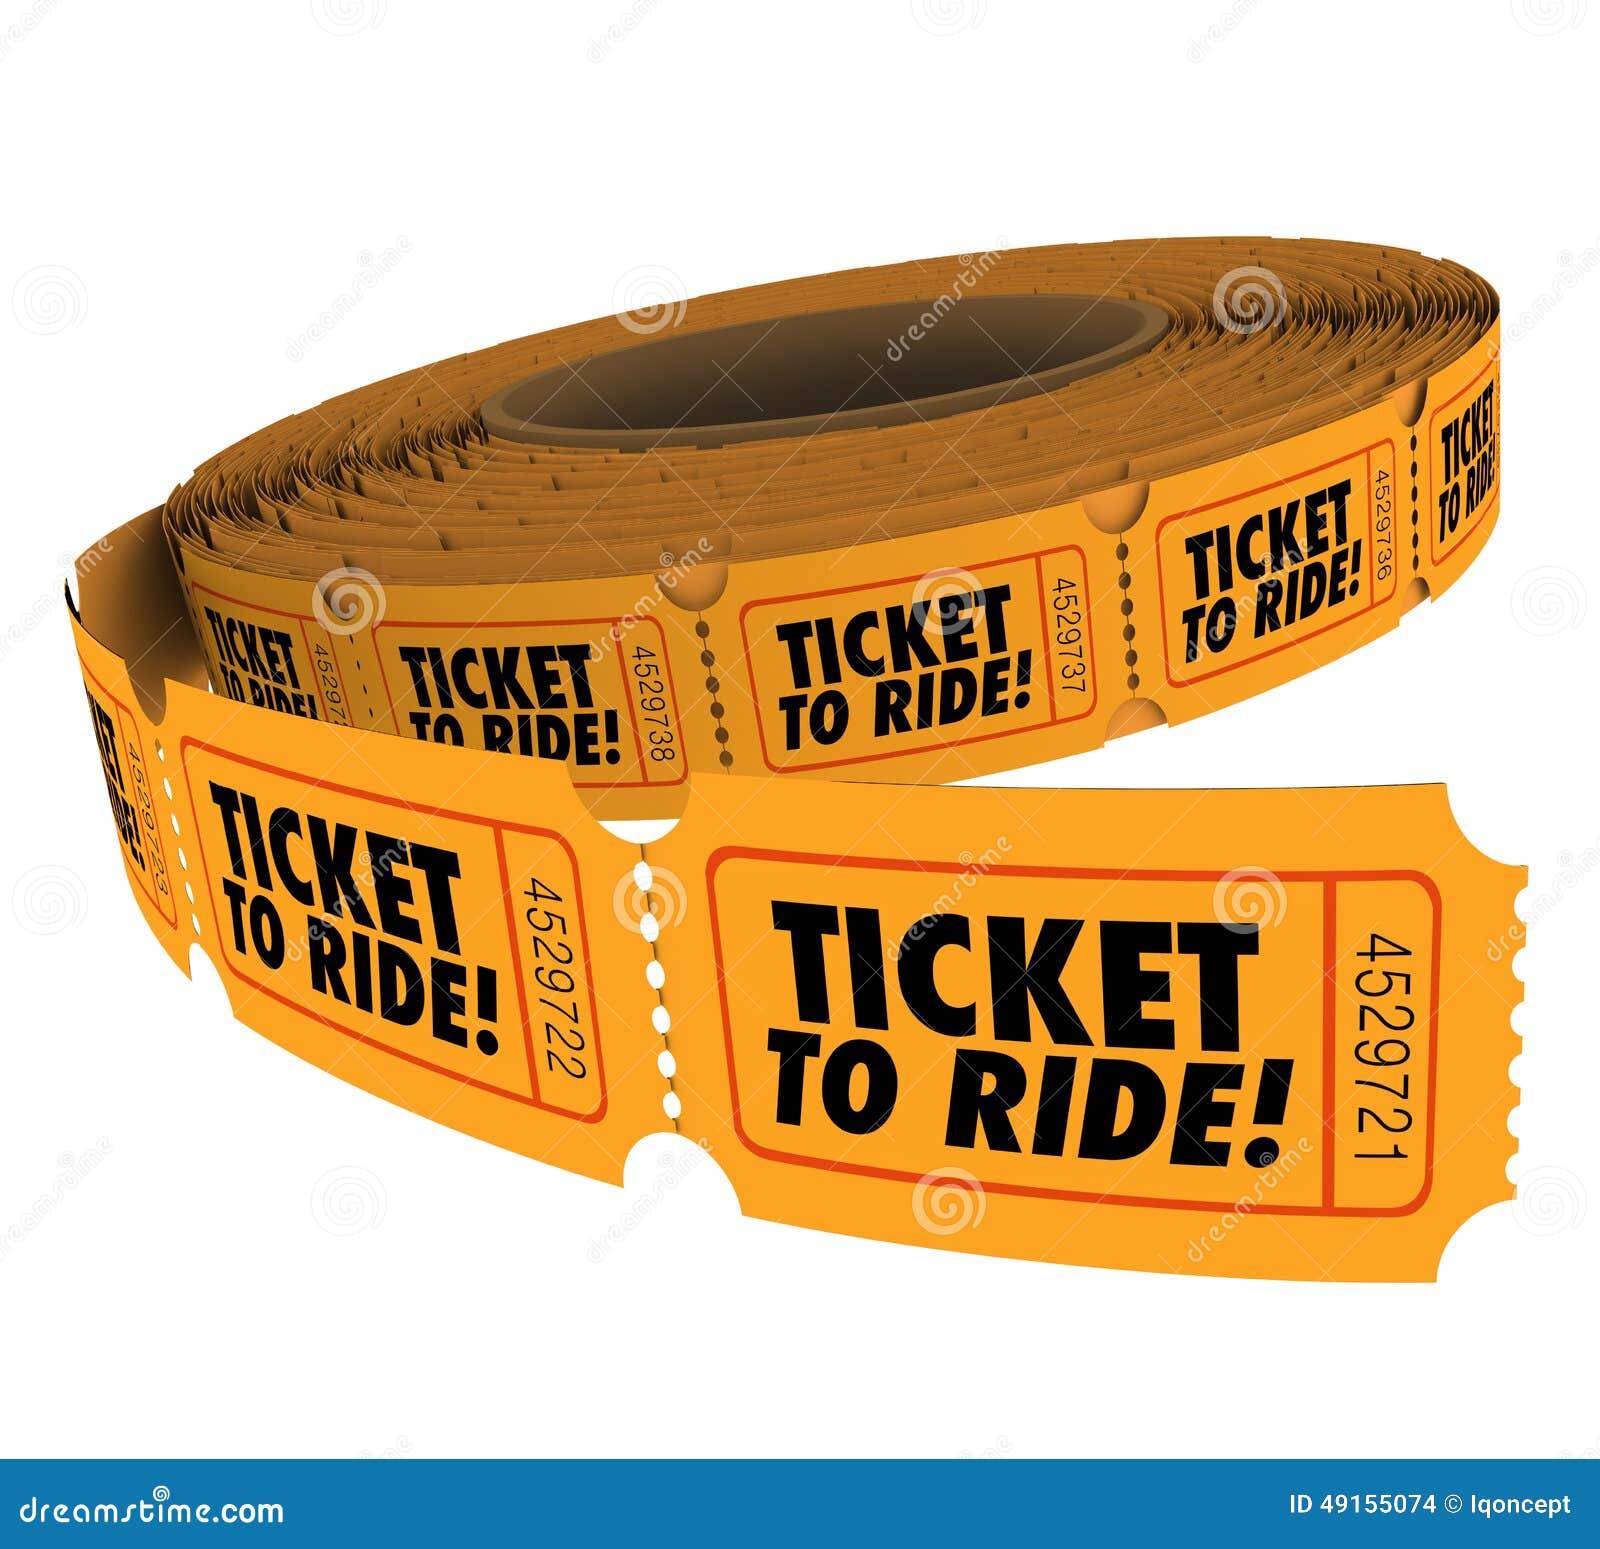 ticket to ride tour tickets